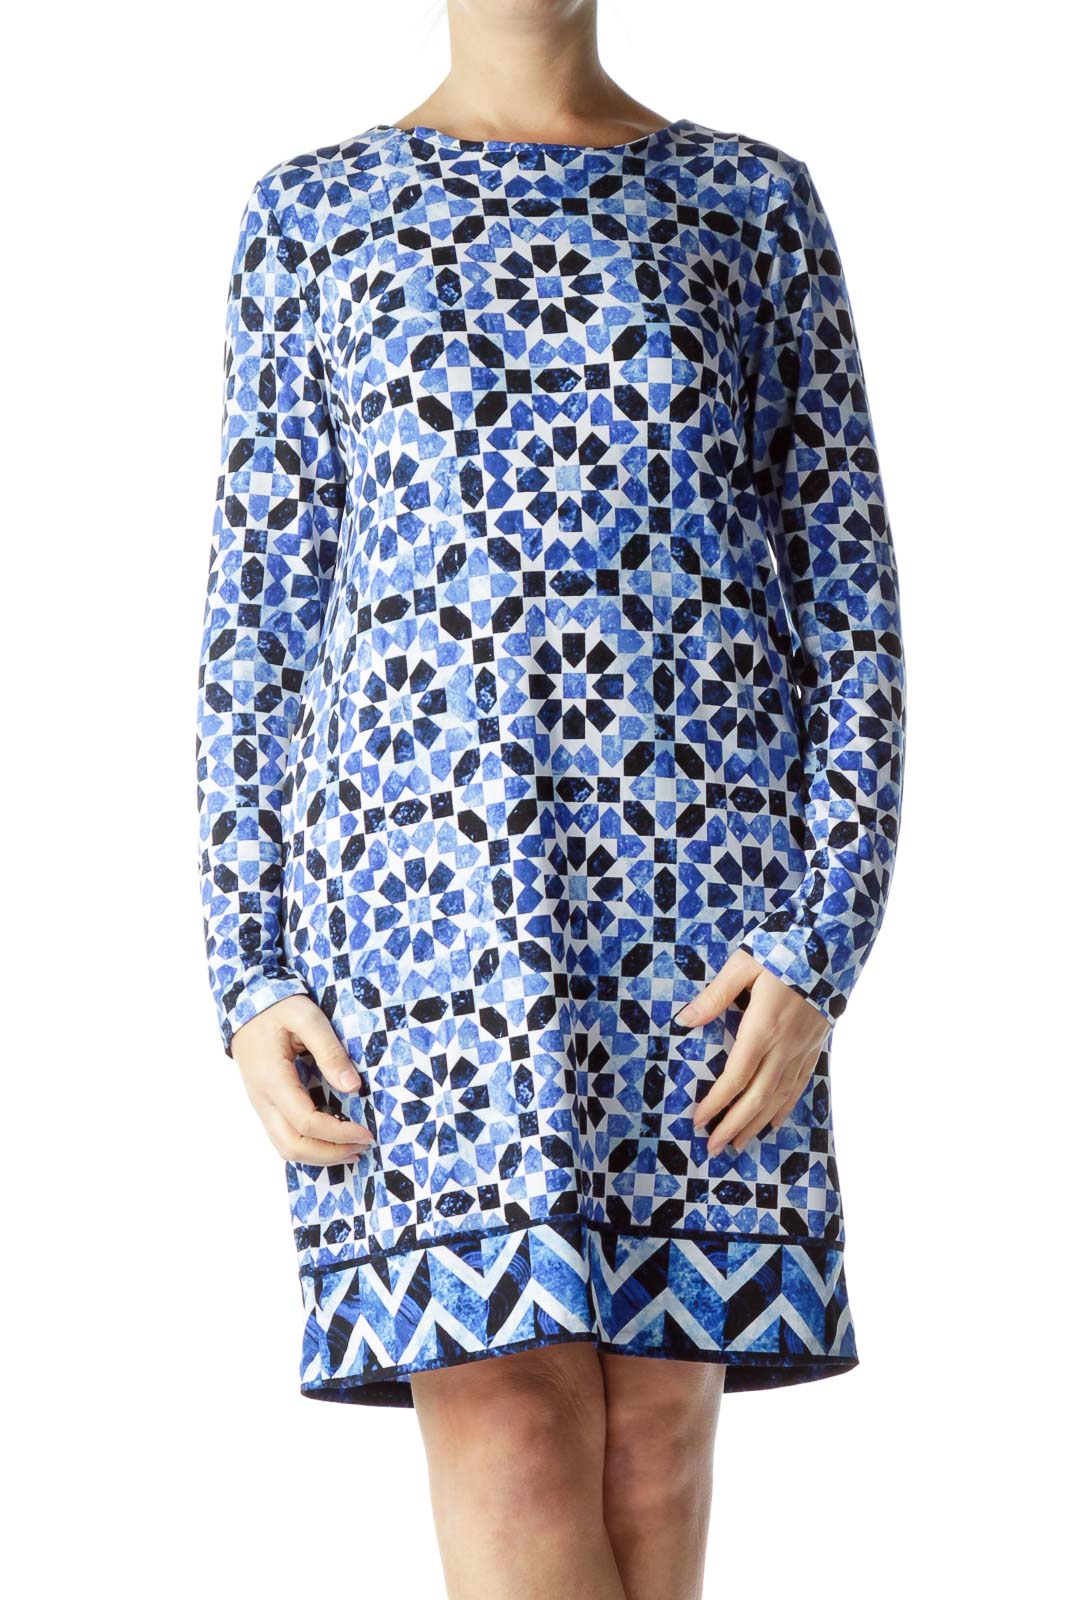 MICHAEL Michael Kors - Blue White Print Long Sleeve Dress Polyester Spandex  | SilkRoll